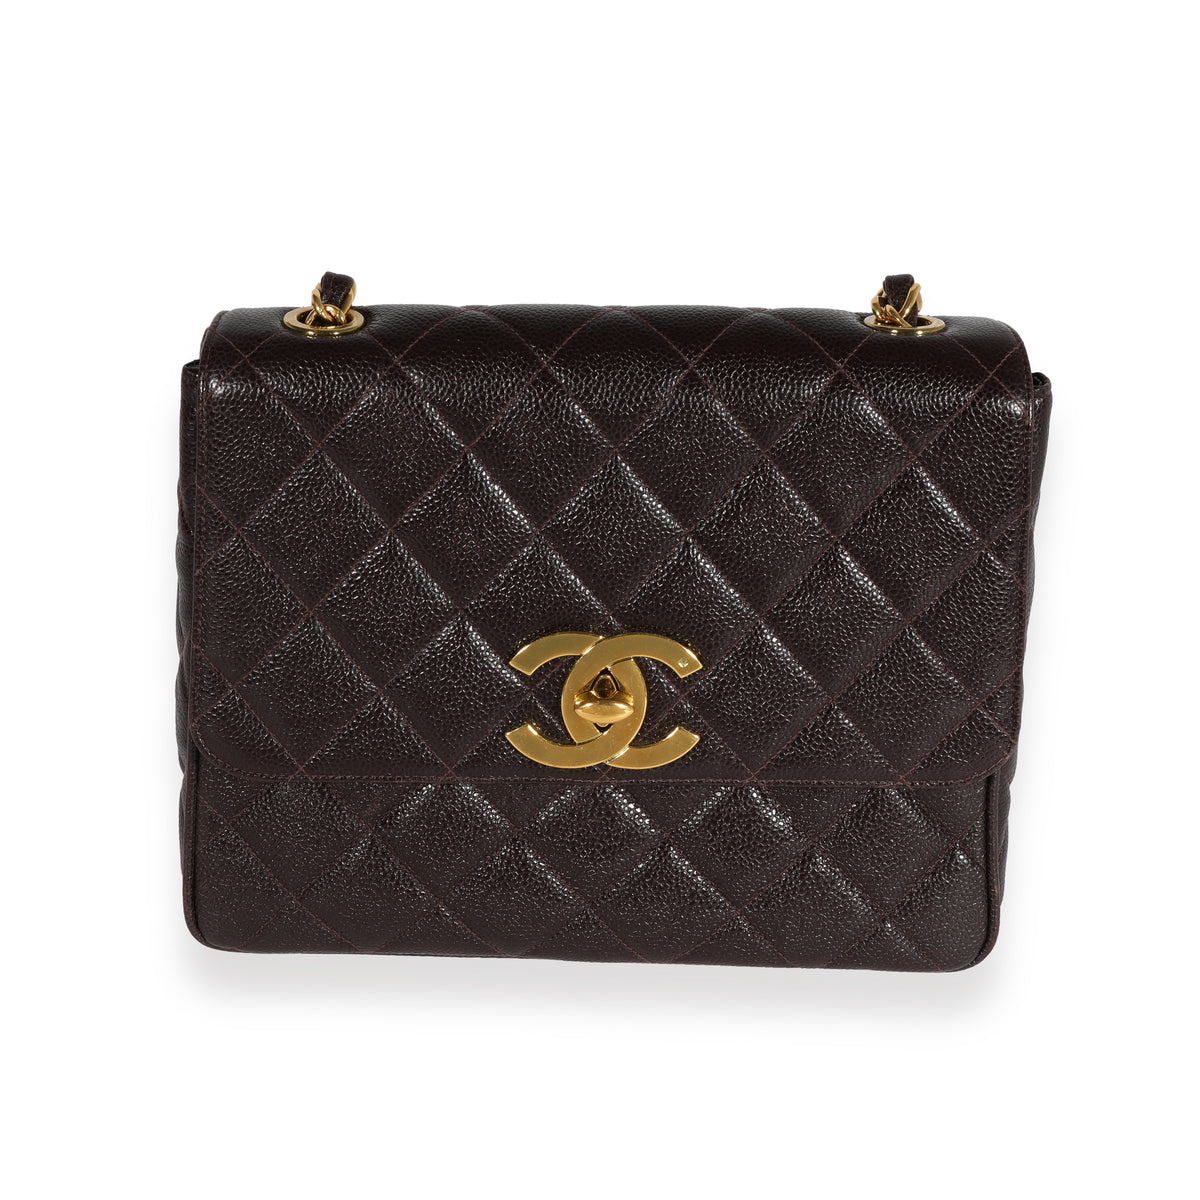 Chanel Vintage Brown Quilted Caviar Square Flap Shoulder Bag